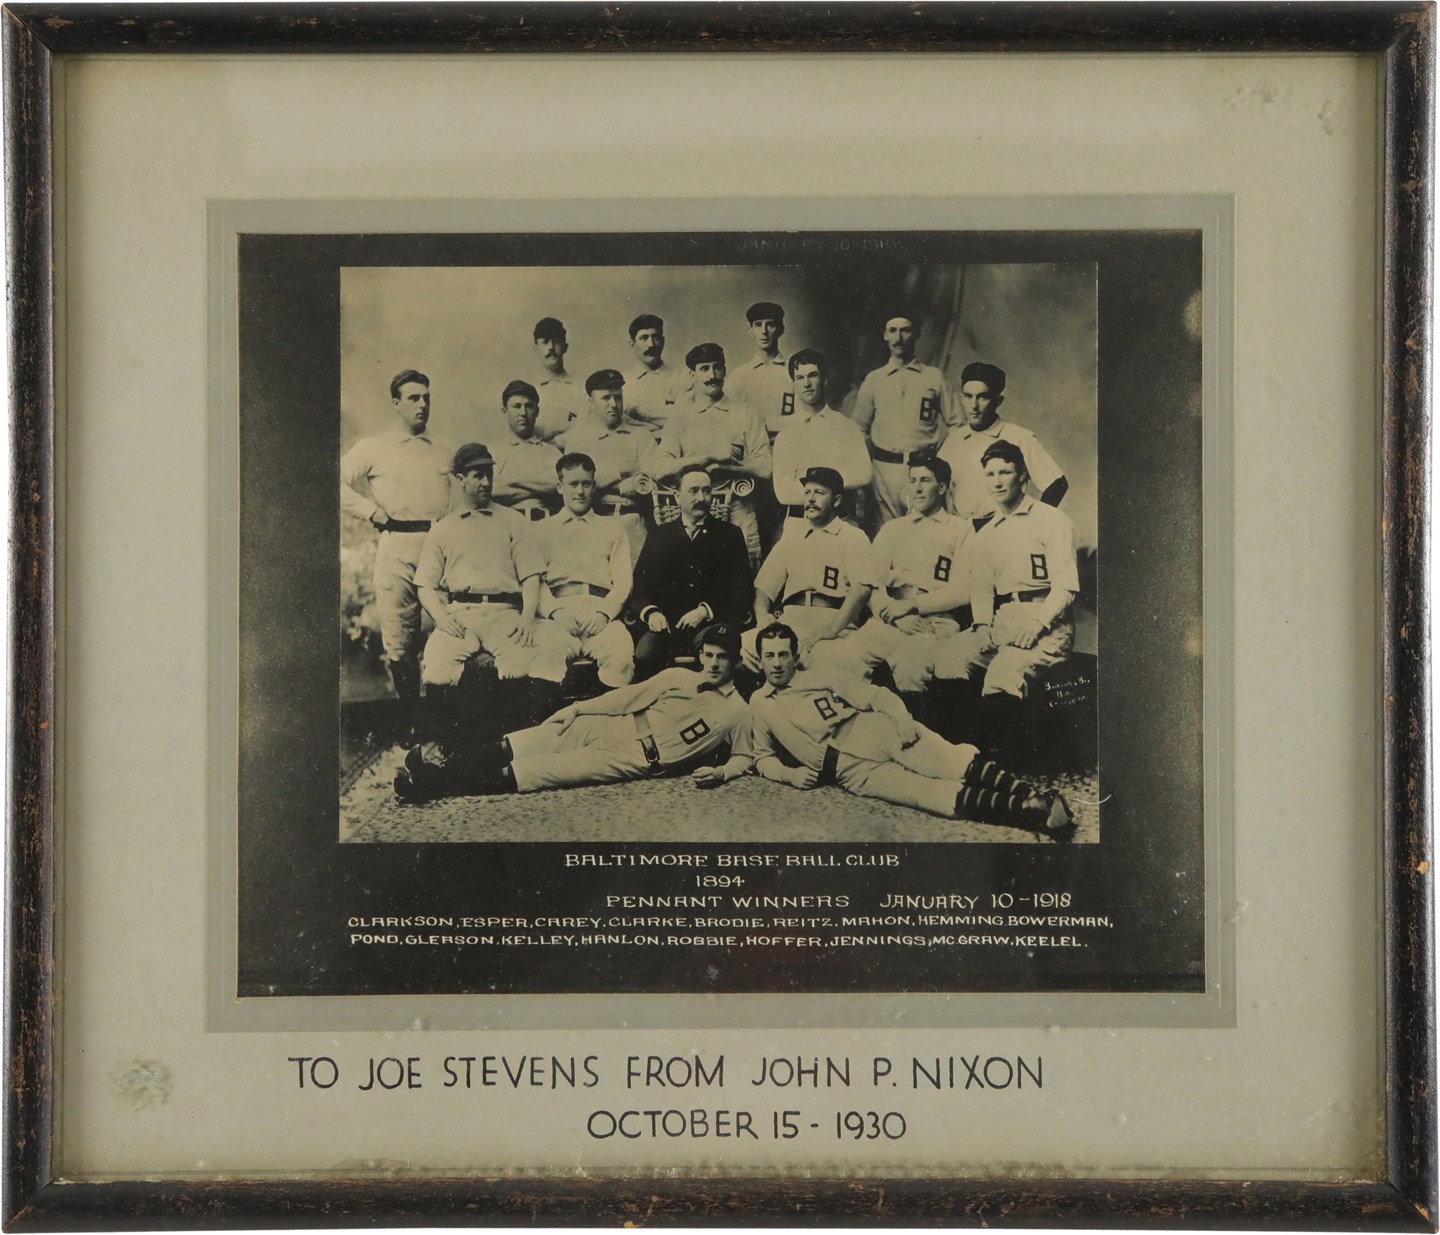 Vintage Sports Photographs - 1894 Baltimore Baseball Club Vintage Team Photograph Presented to Joe Stevens